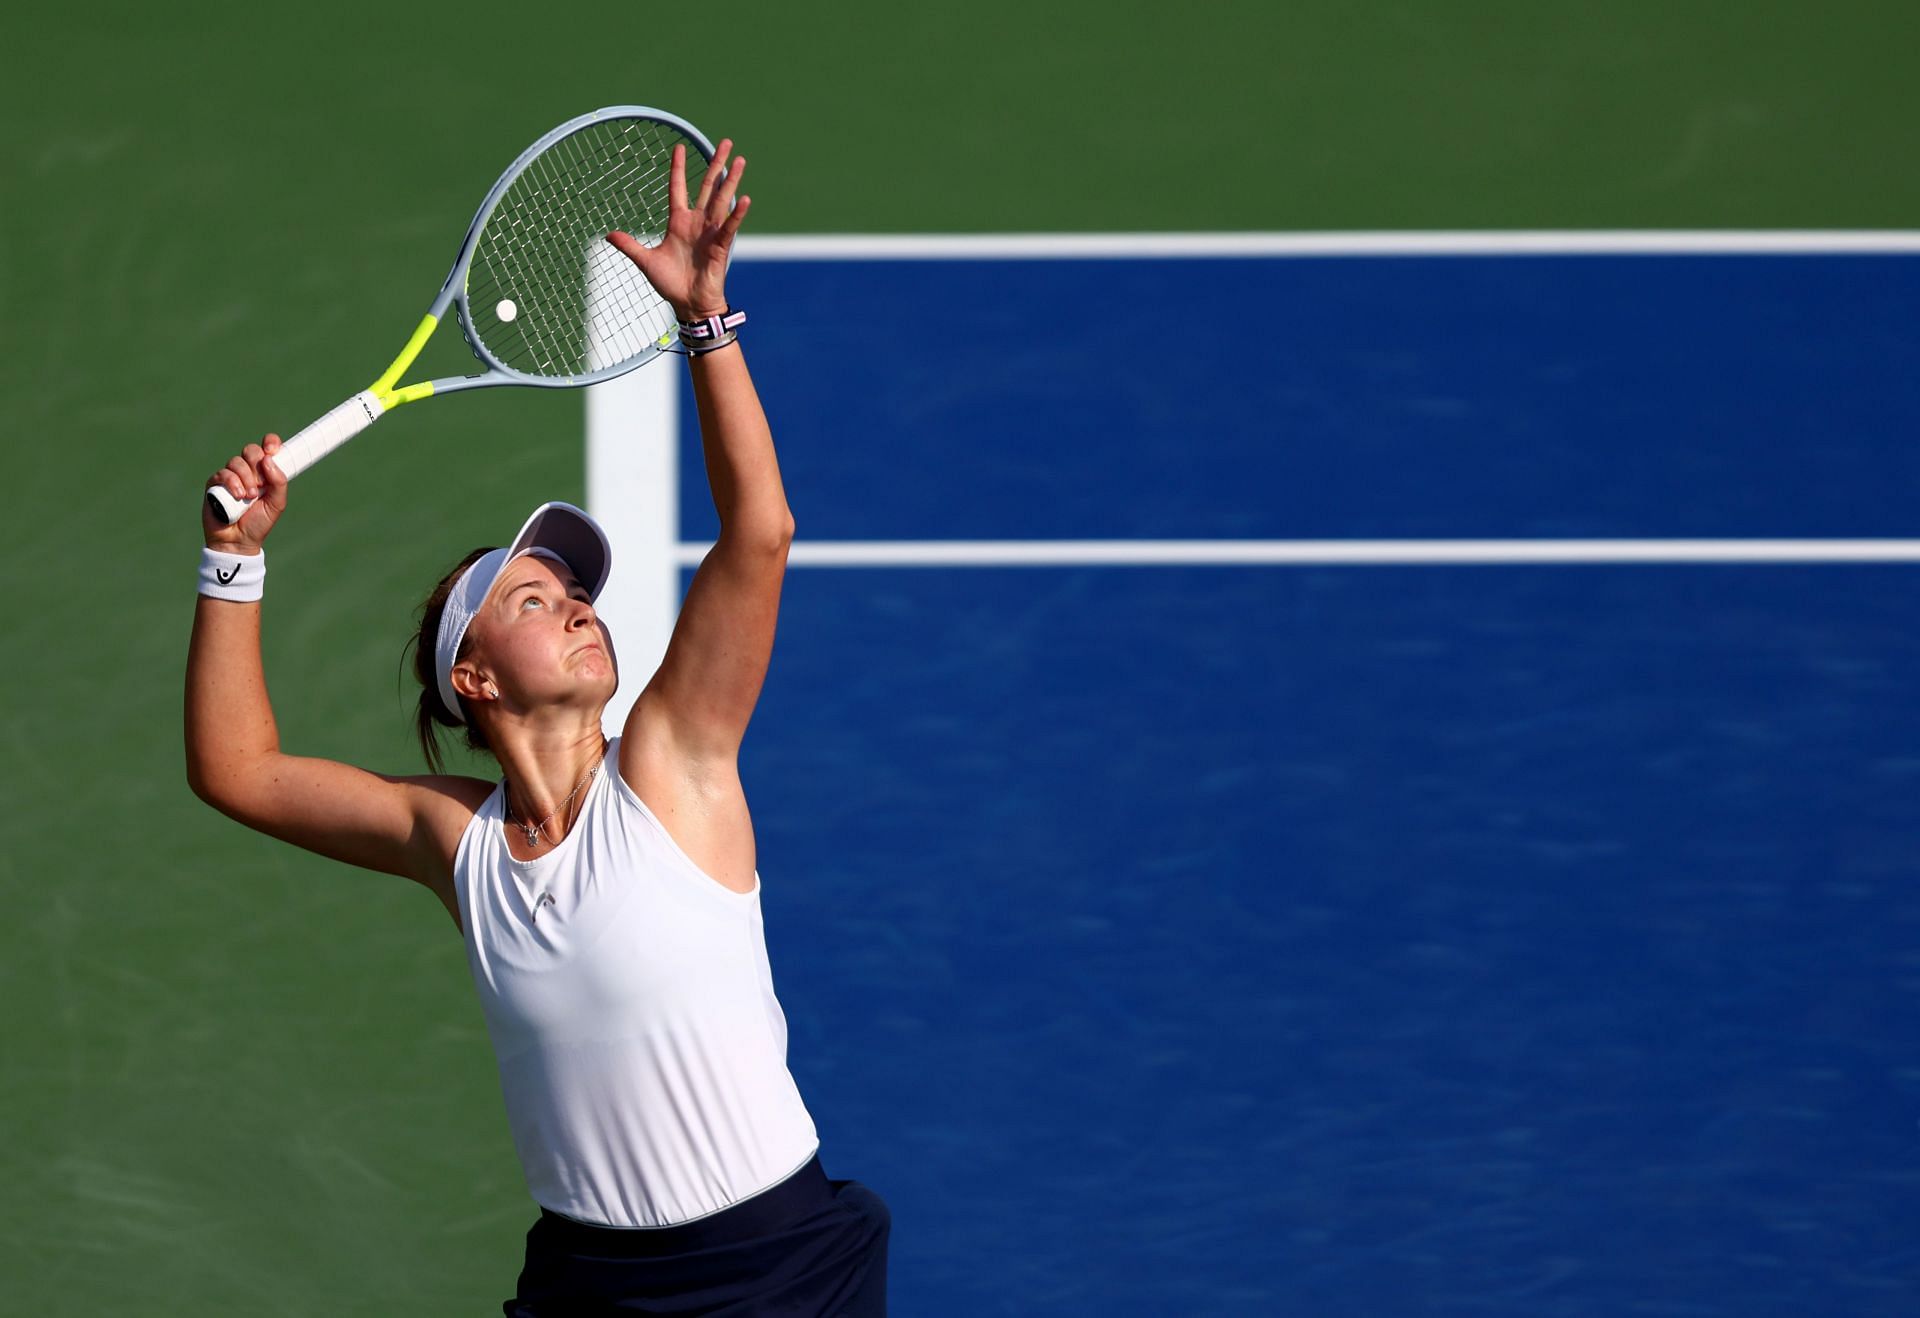 Barbora Krejcikova serves during a match at the Dubai Duty Free Tennis Championships